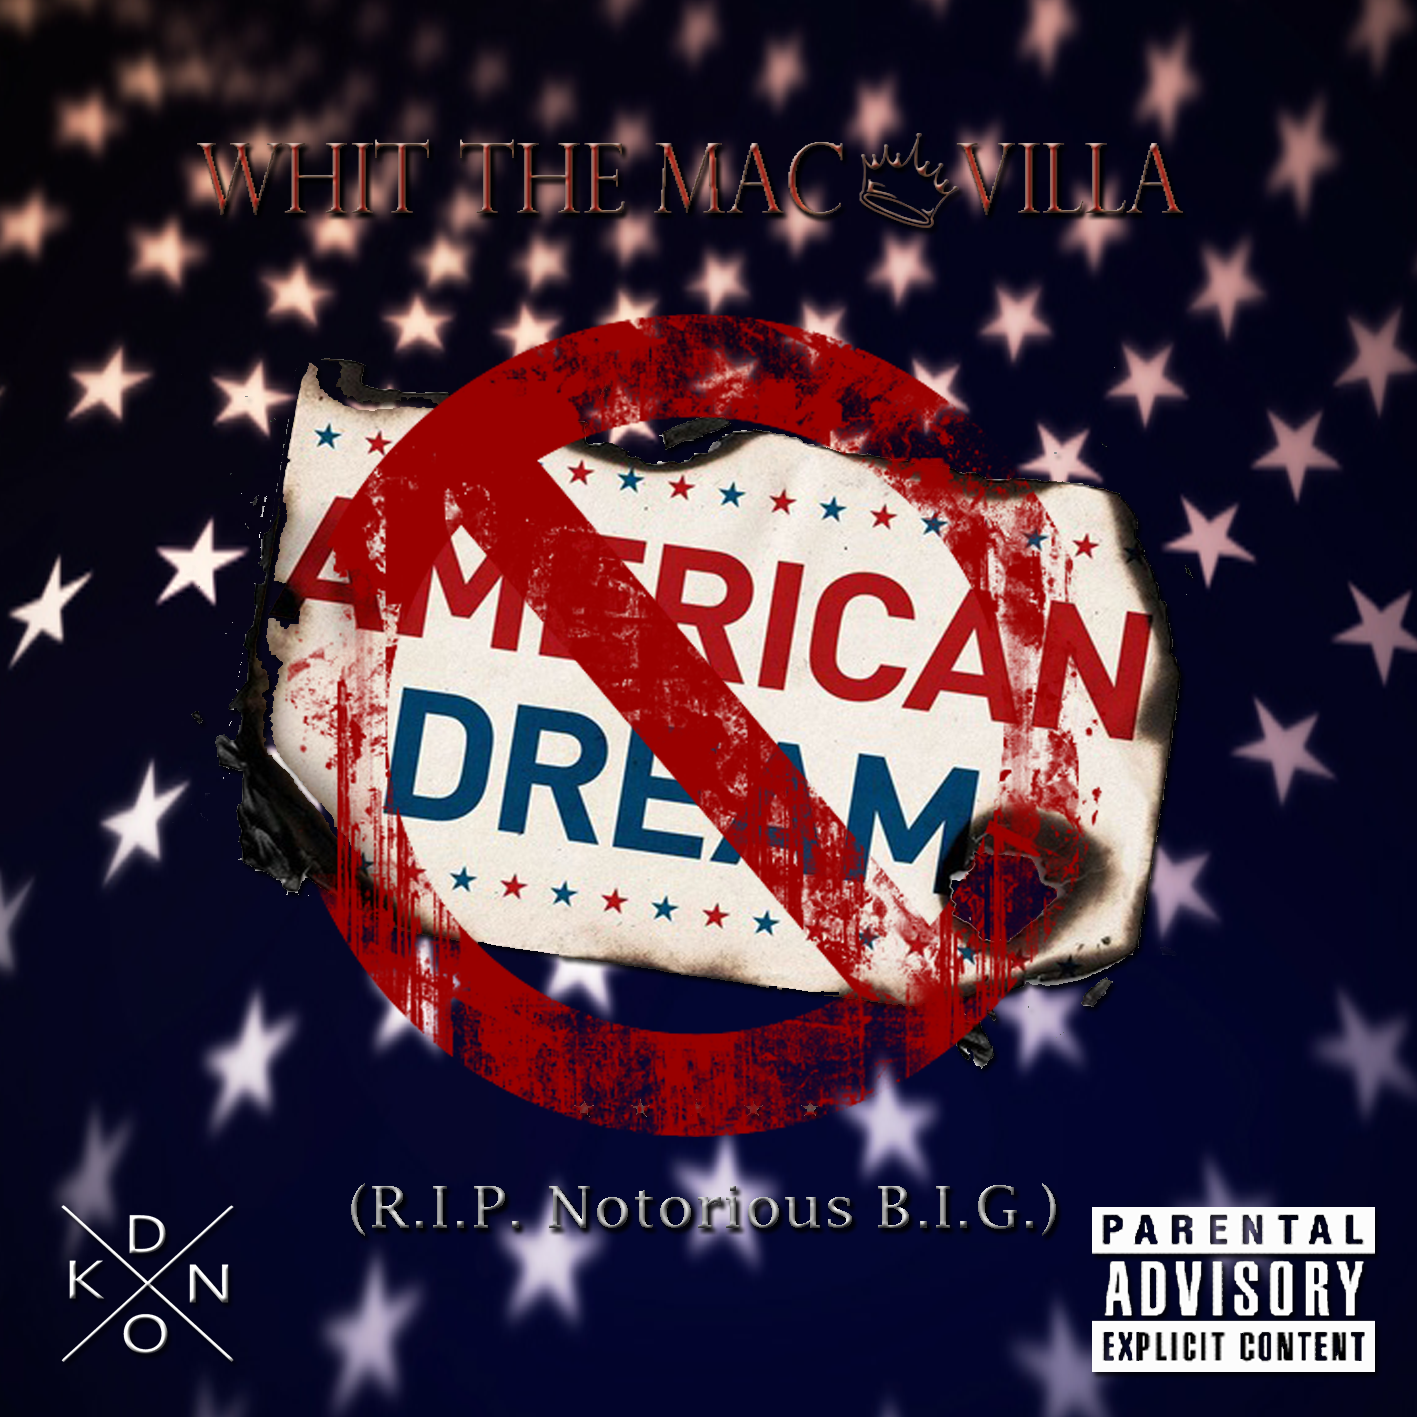 Whit the Mac Villa – “American Dream (R.I.P. Notorious B.I.G.)”